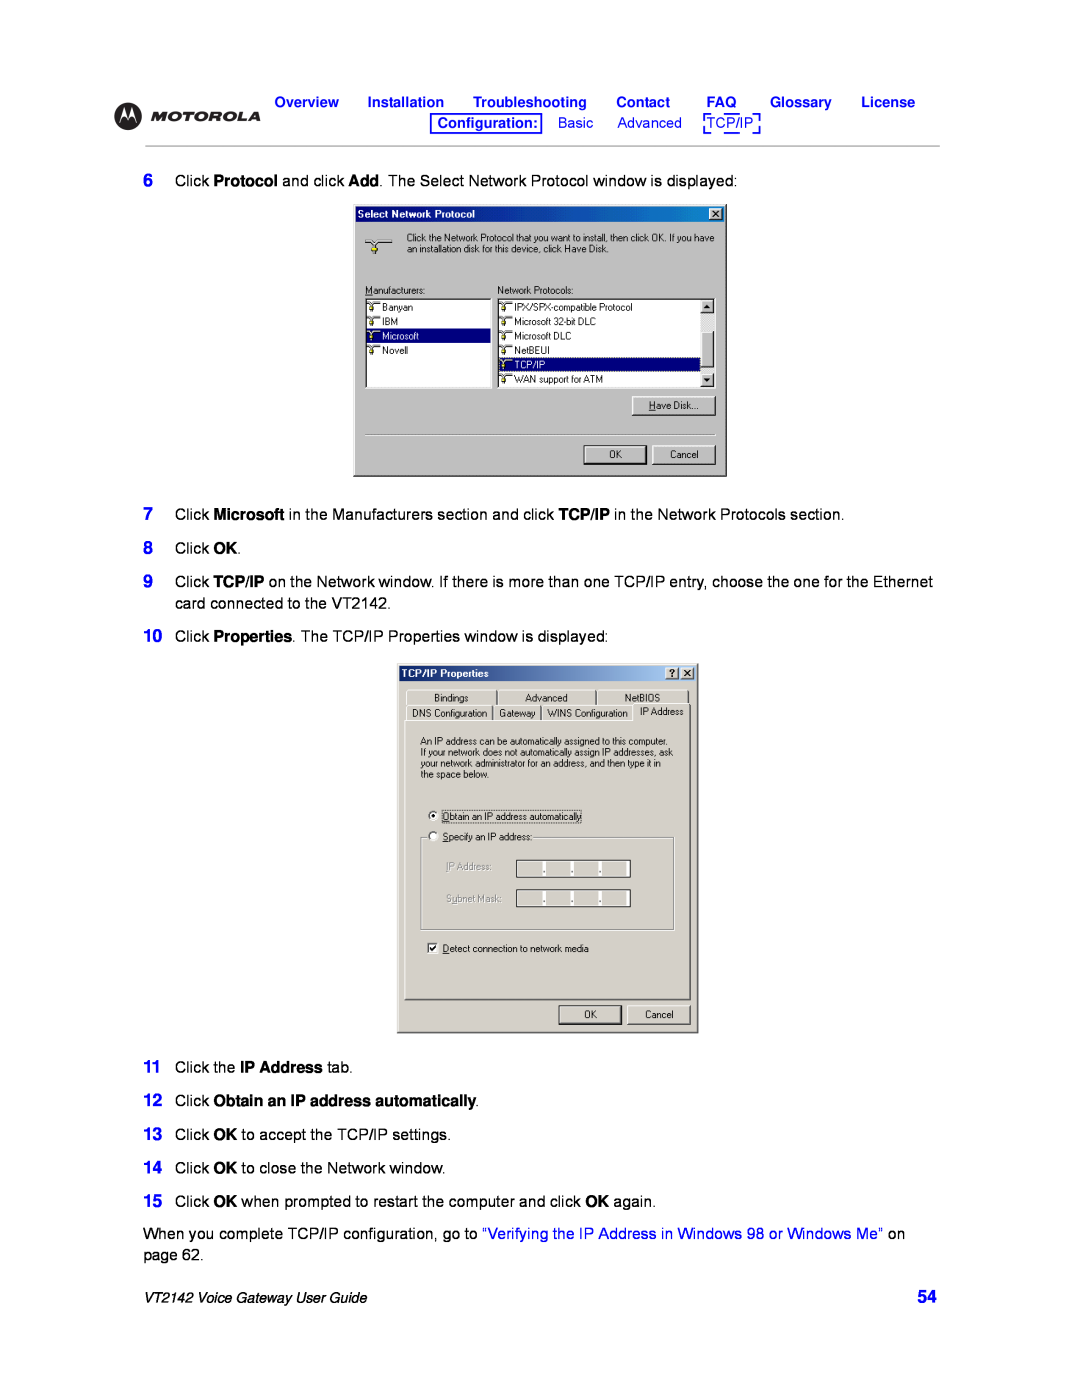 Motorola VT2142 manual Click Obtain an IP address automatically 